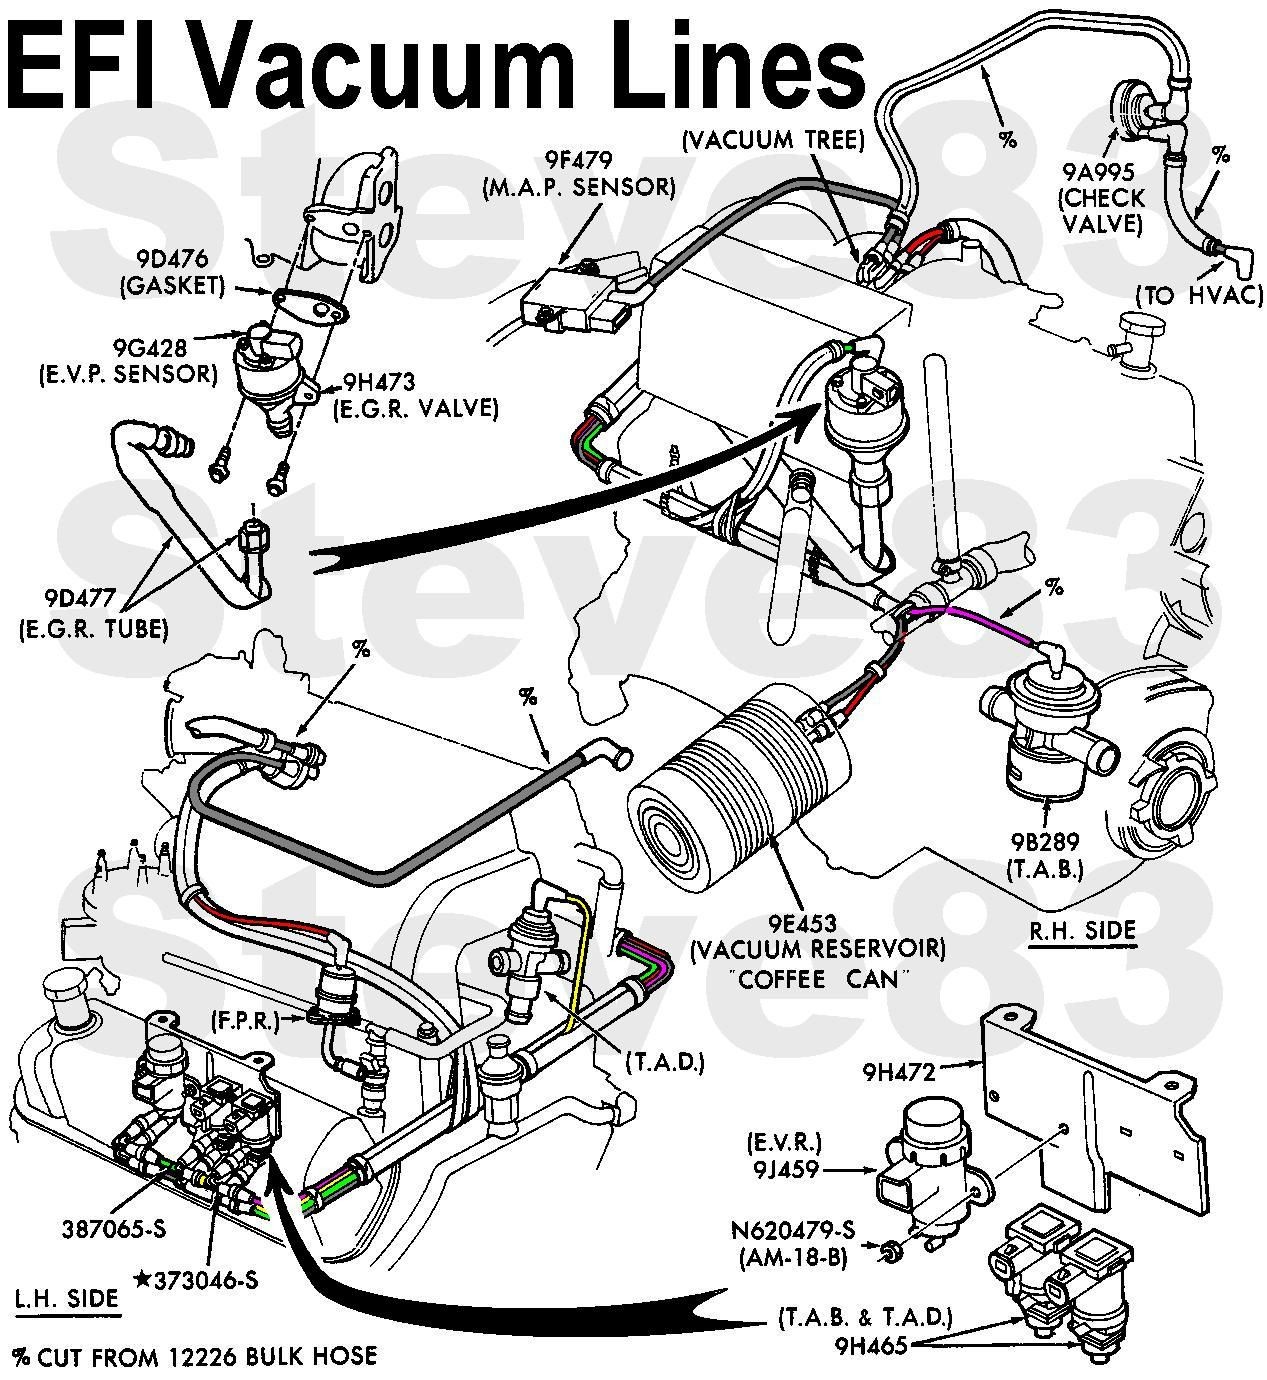 86 ford F-150 302 Engine Vacum Line Diagram 351w I Need Vacuum Line Diagram Please Help 1989 F 250 5 8l ford Truck Enthusiasts forums Of 86 ford F-150 302 Engine Vacum Line Diagram